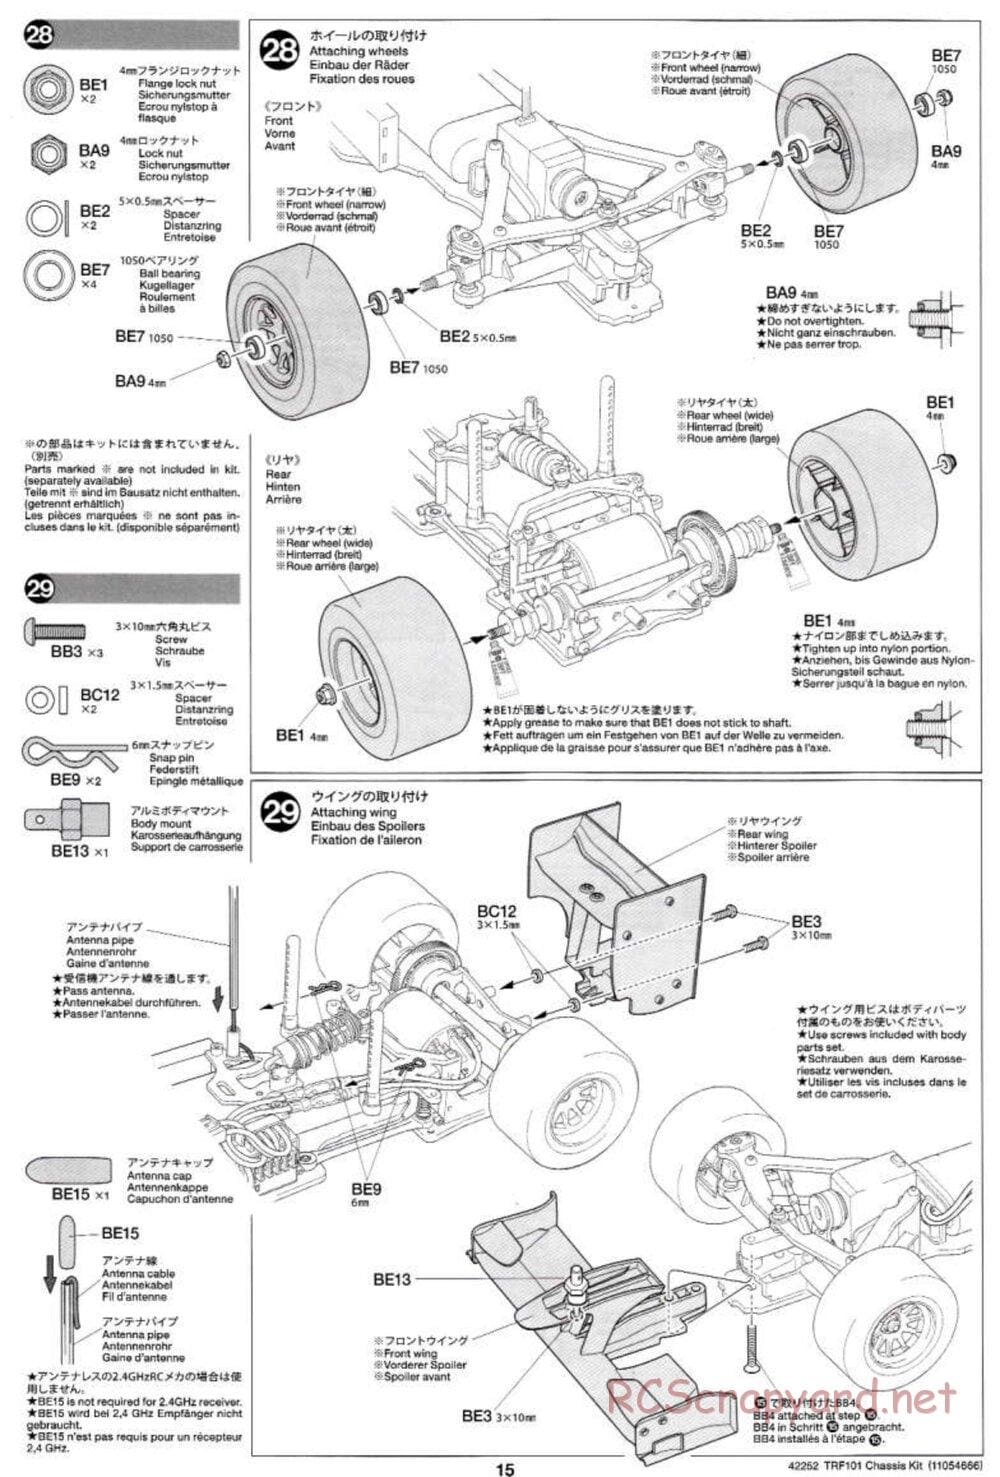 Tamiya - TRF101 Chassis - Manual - Page 15